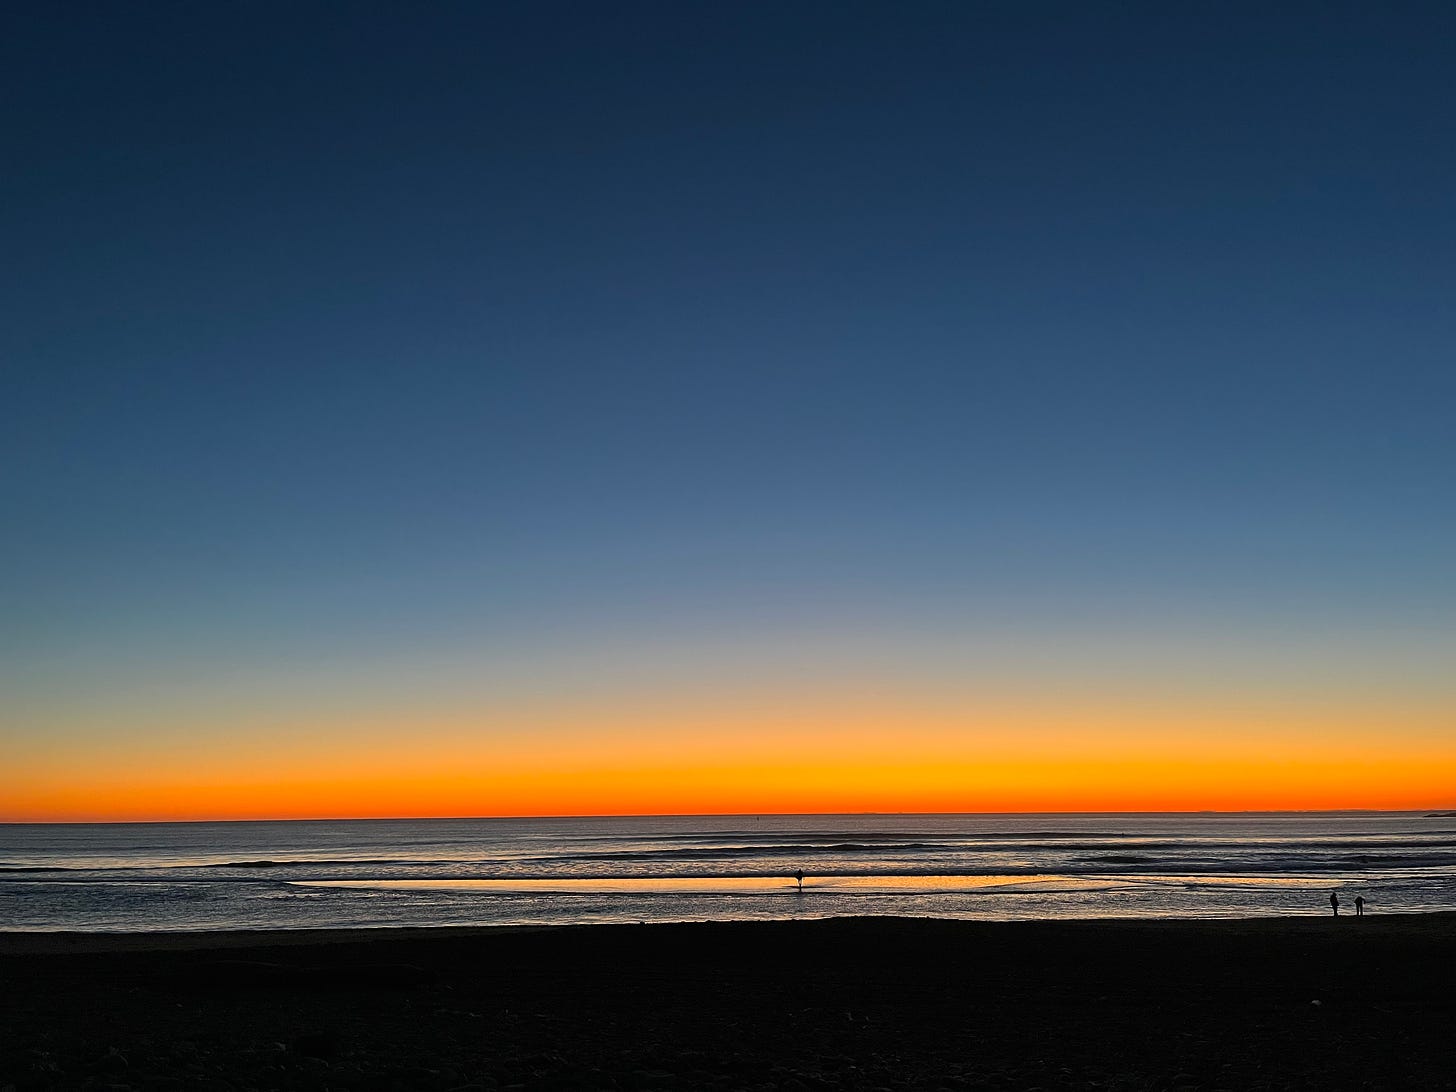 Dark blue sky with dark orange band on the horizon, from the beach.